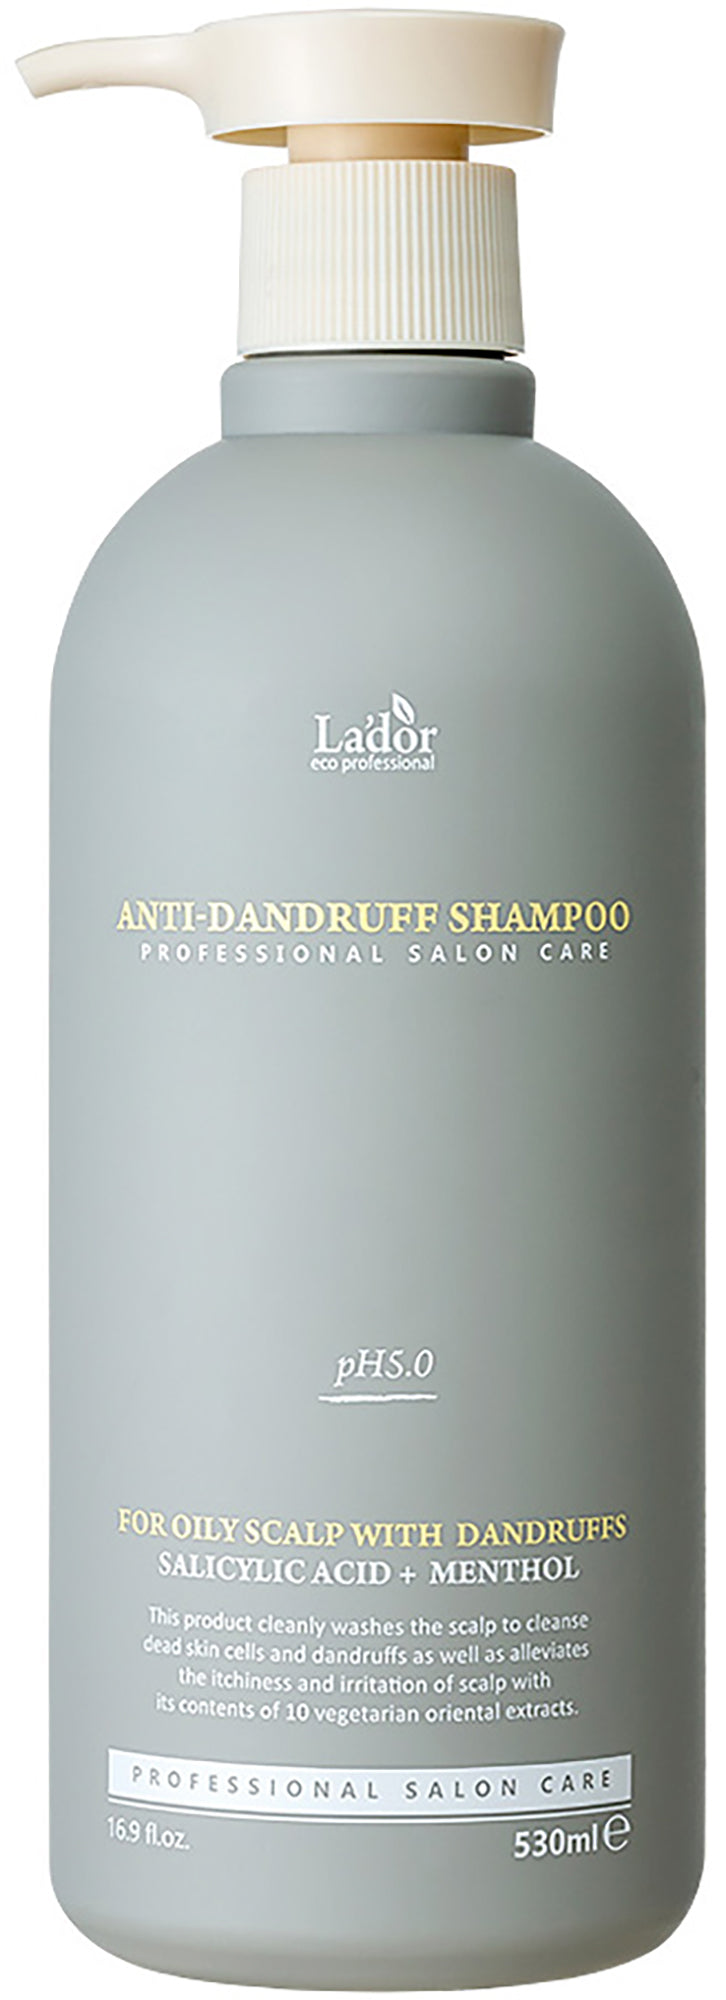 Lador Anti-Dandruff Shampoo 530ml